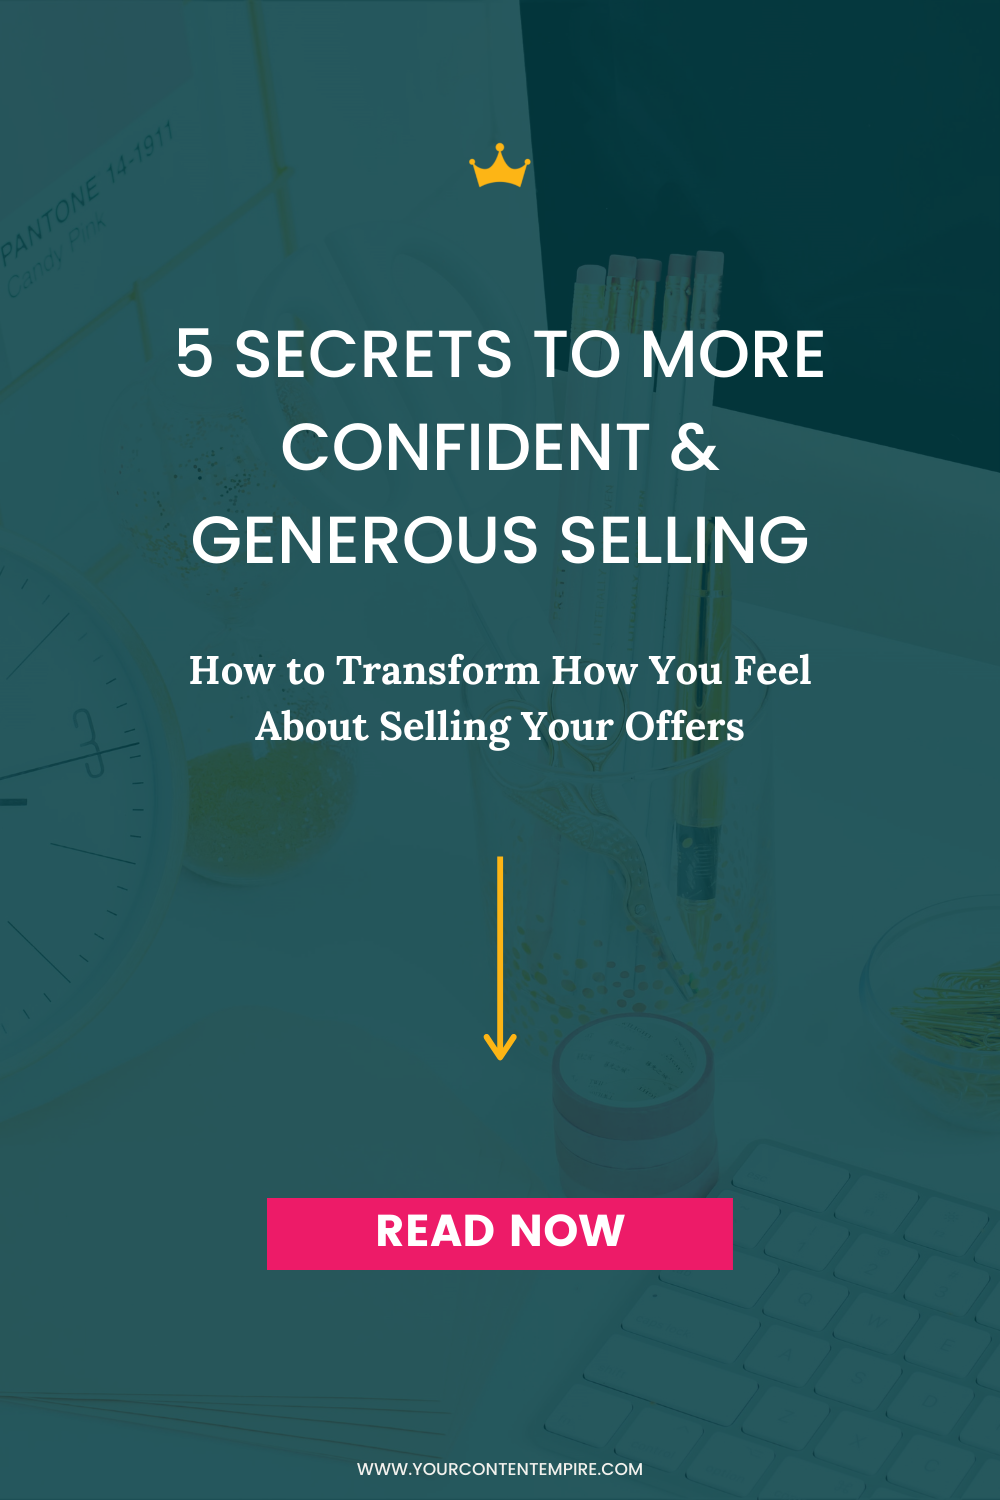 5 Secrets to More Confident & Generous Selling